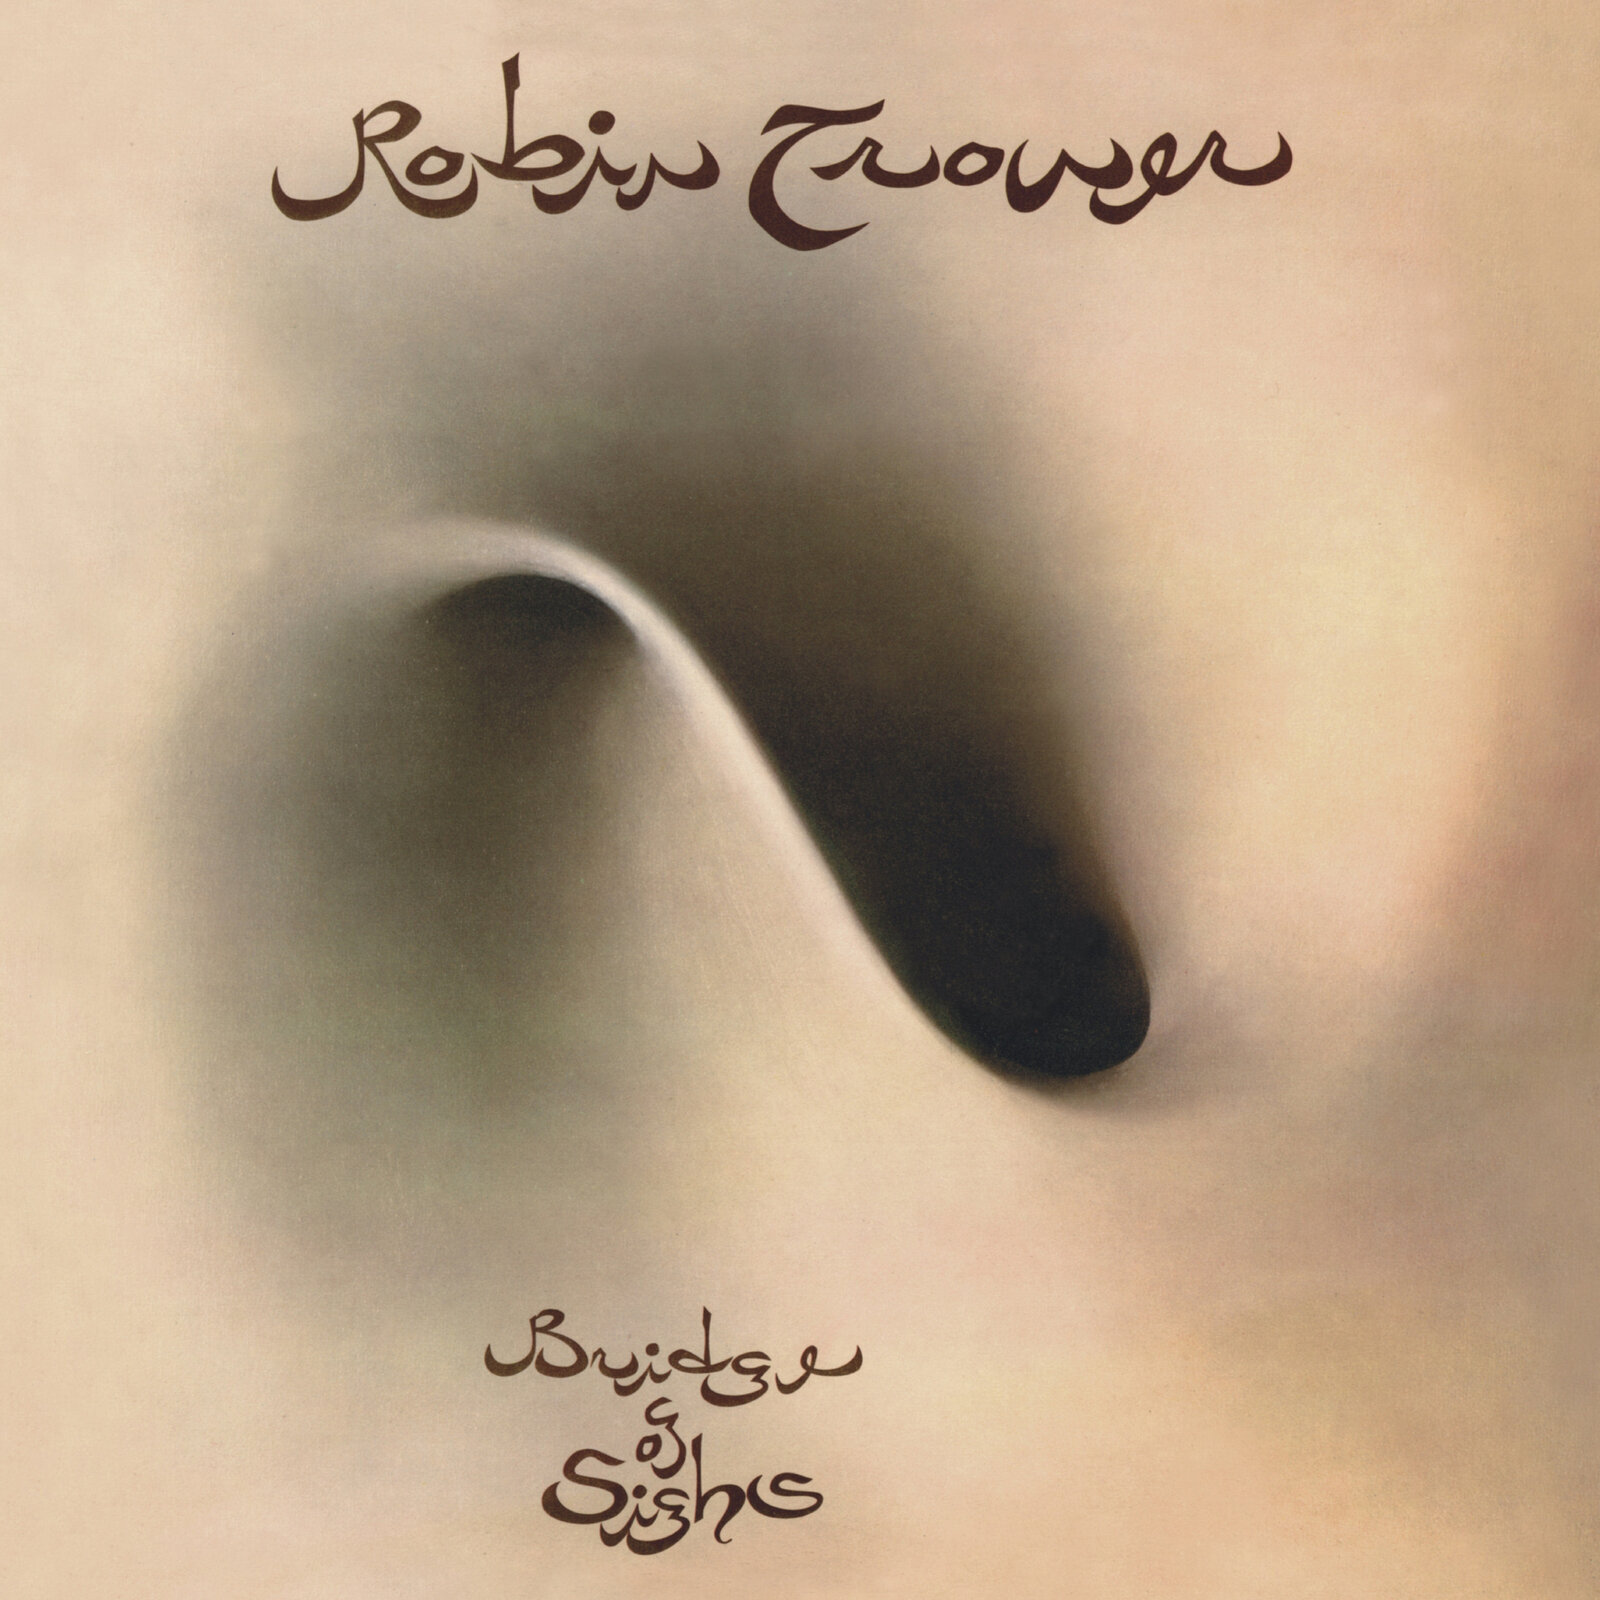 LP Robin Trower - Bridge of Sighs (50th Anniversary Edition) (High Quality) (2 LP)